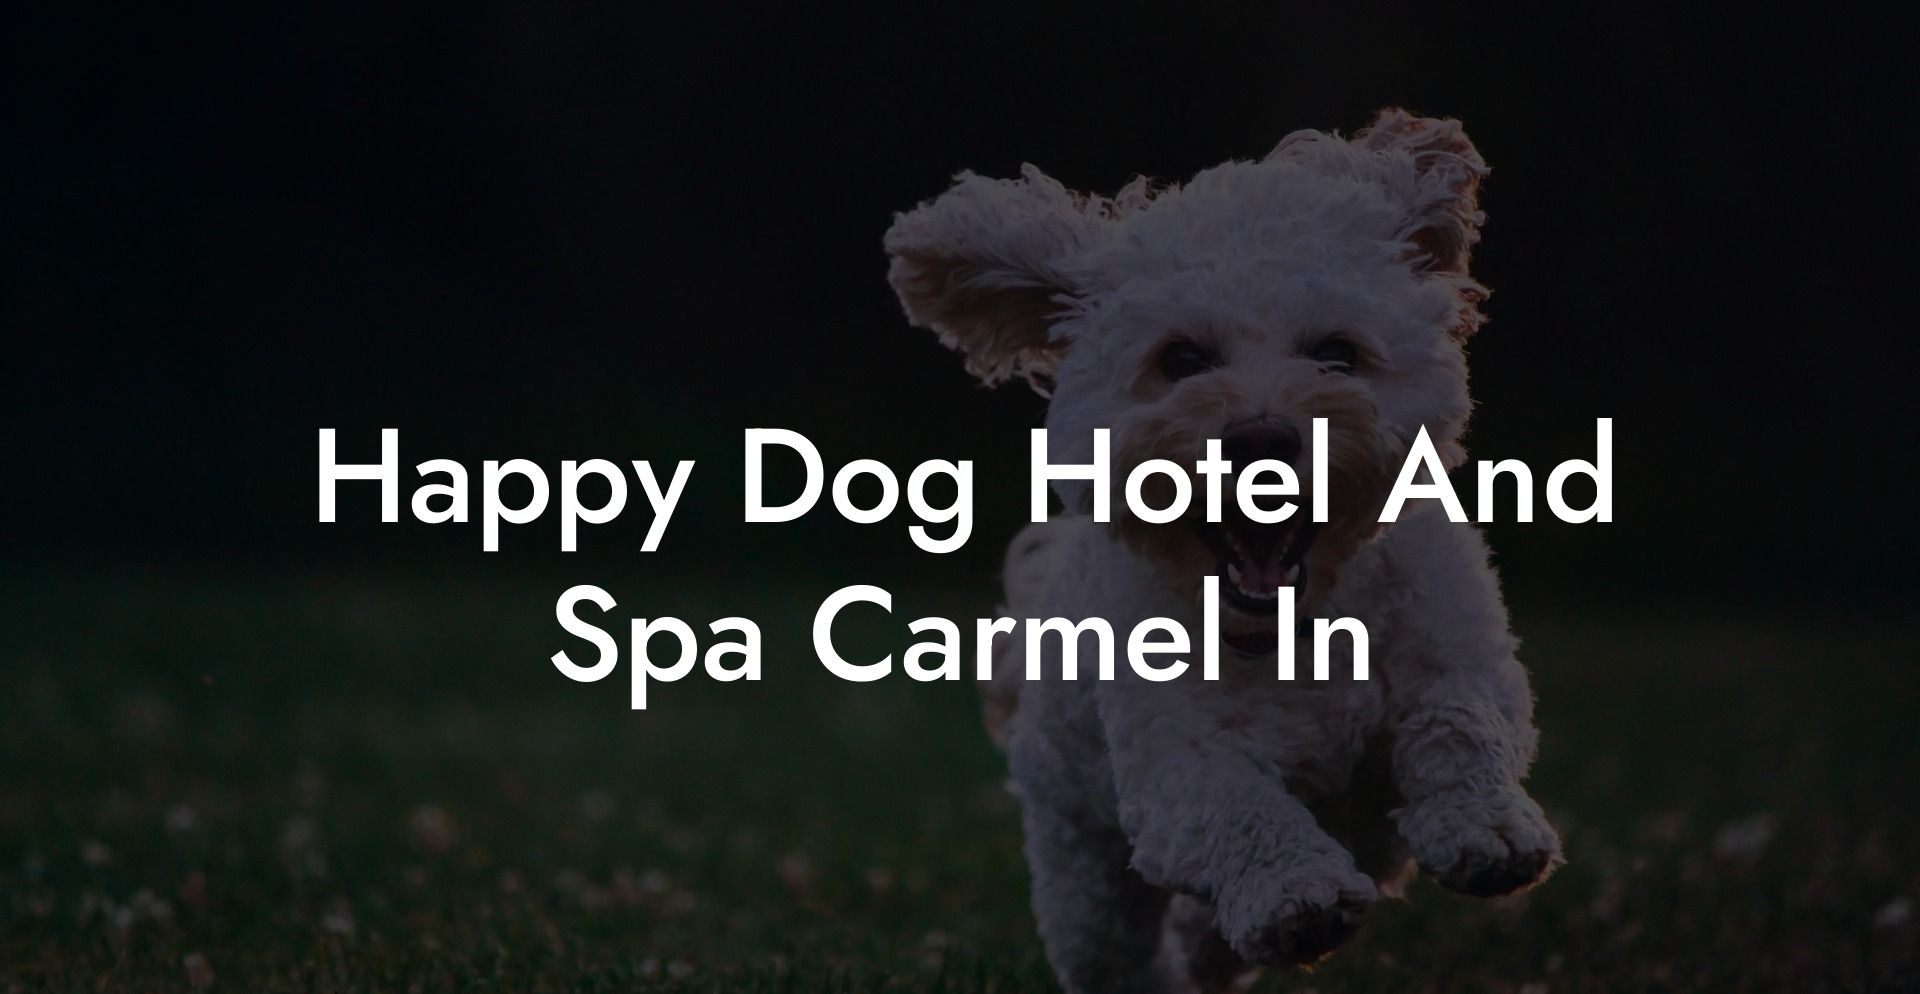 Happy Dog Hotel And Spa Carmel In